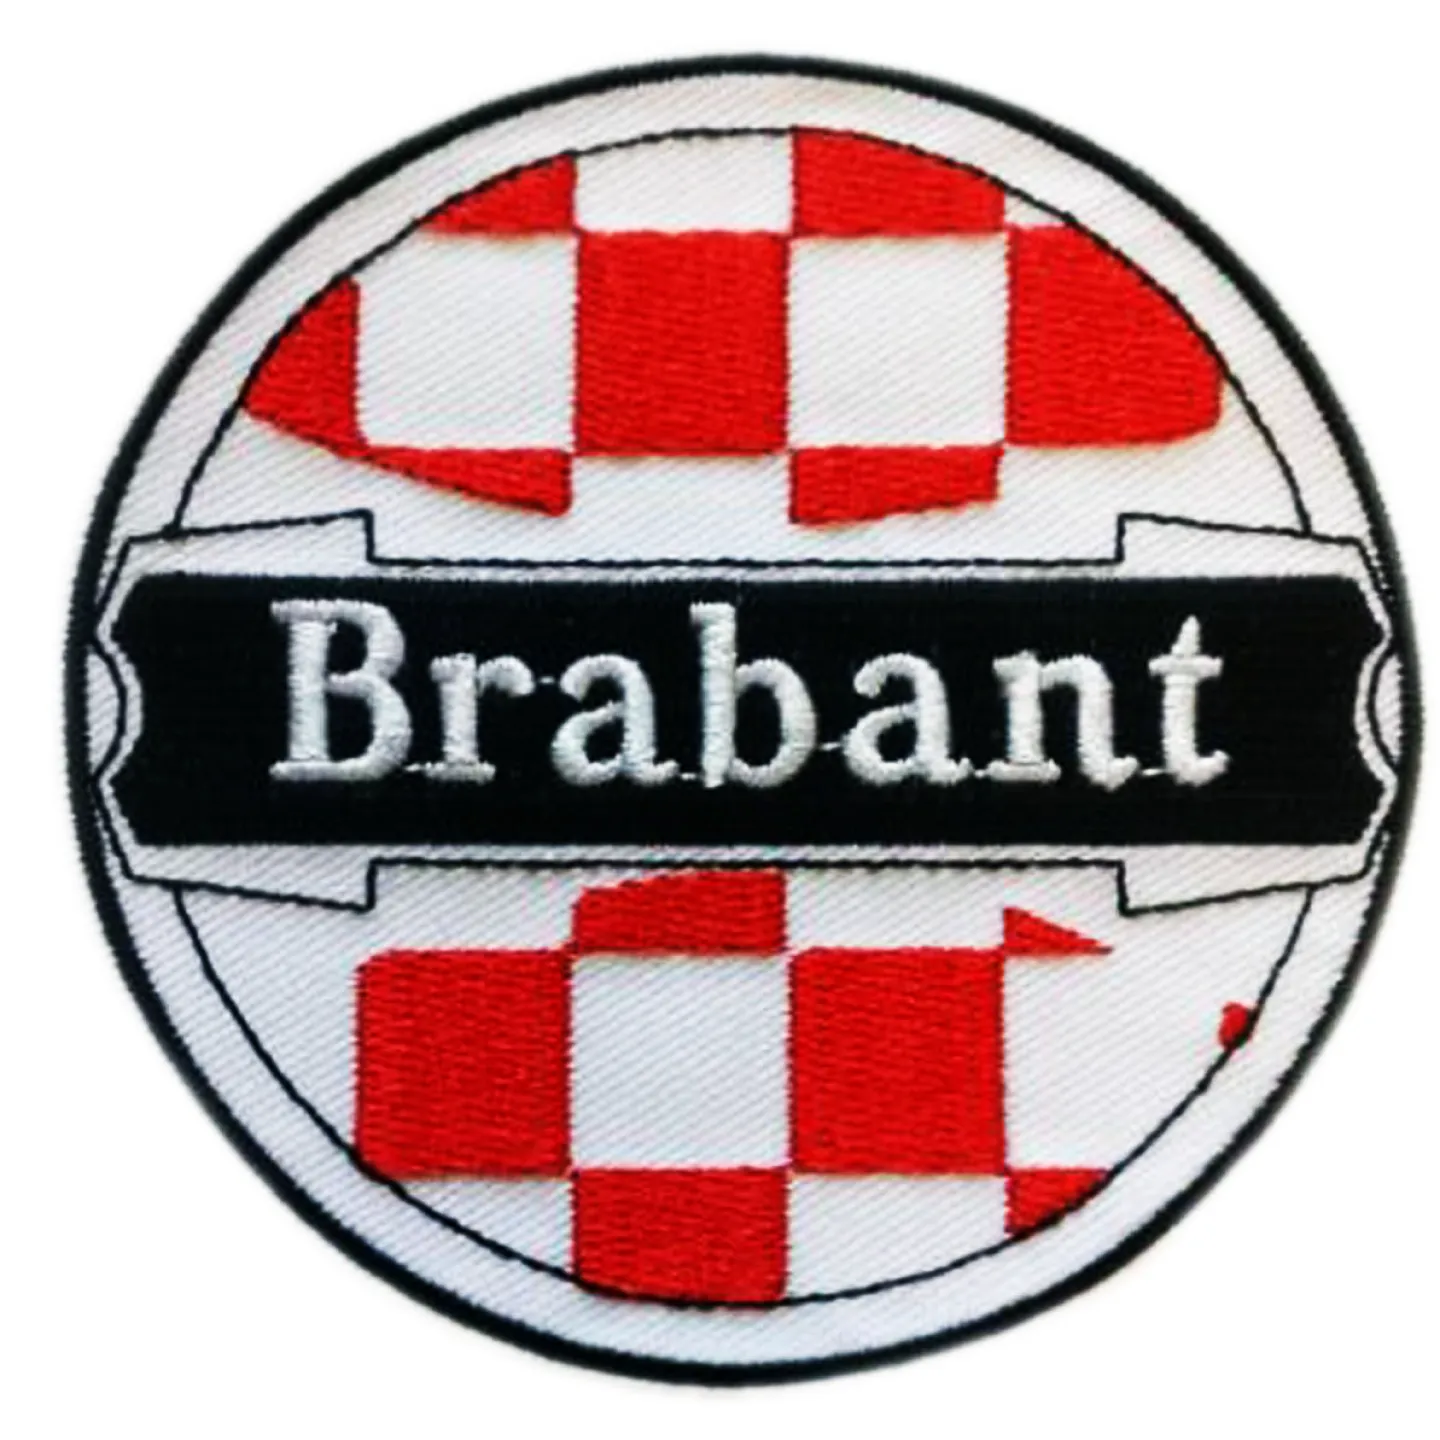 Oeteldonk embleem Brabant.